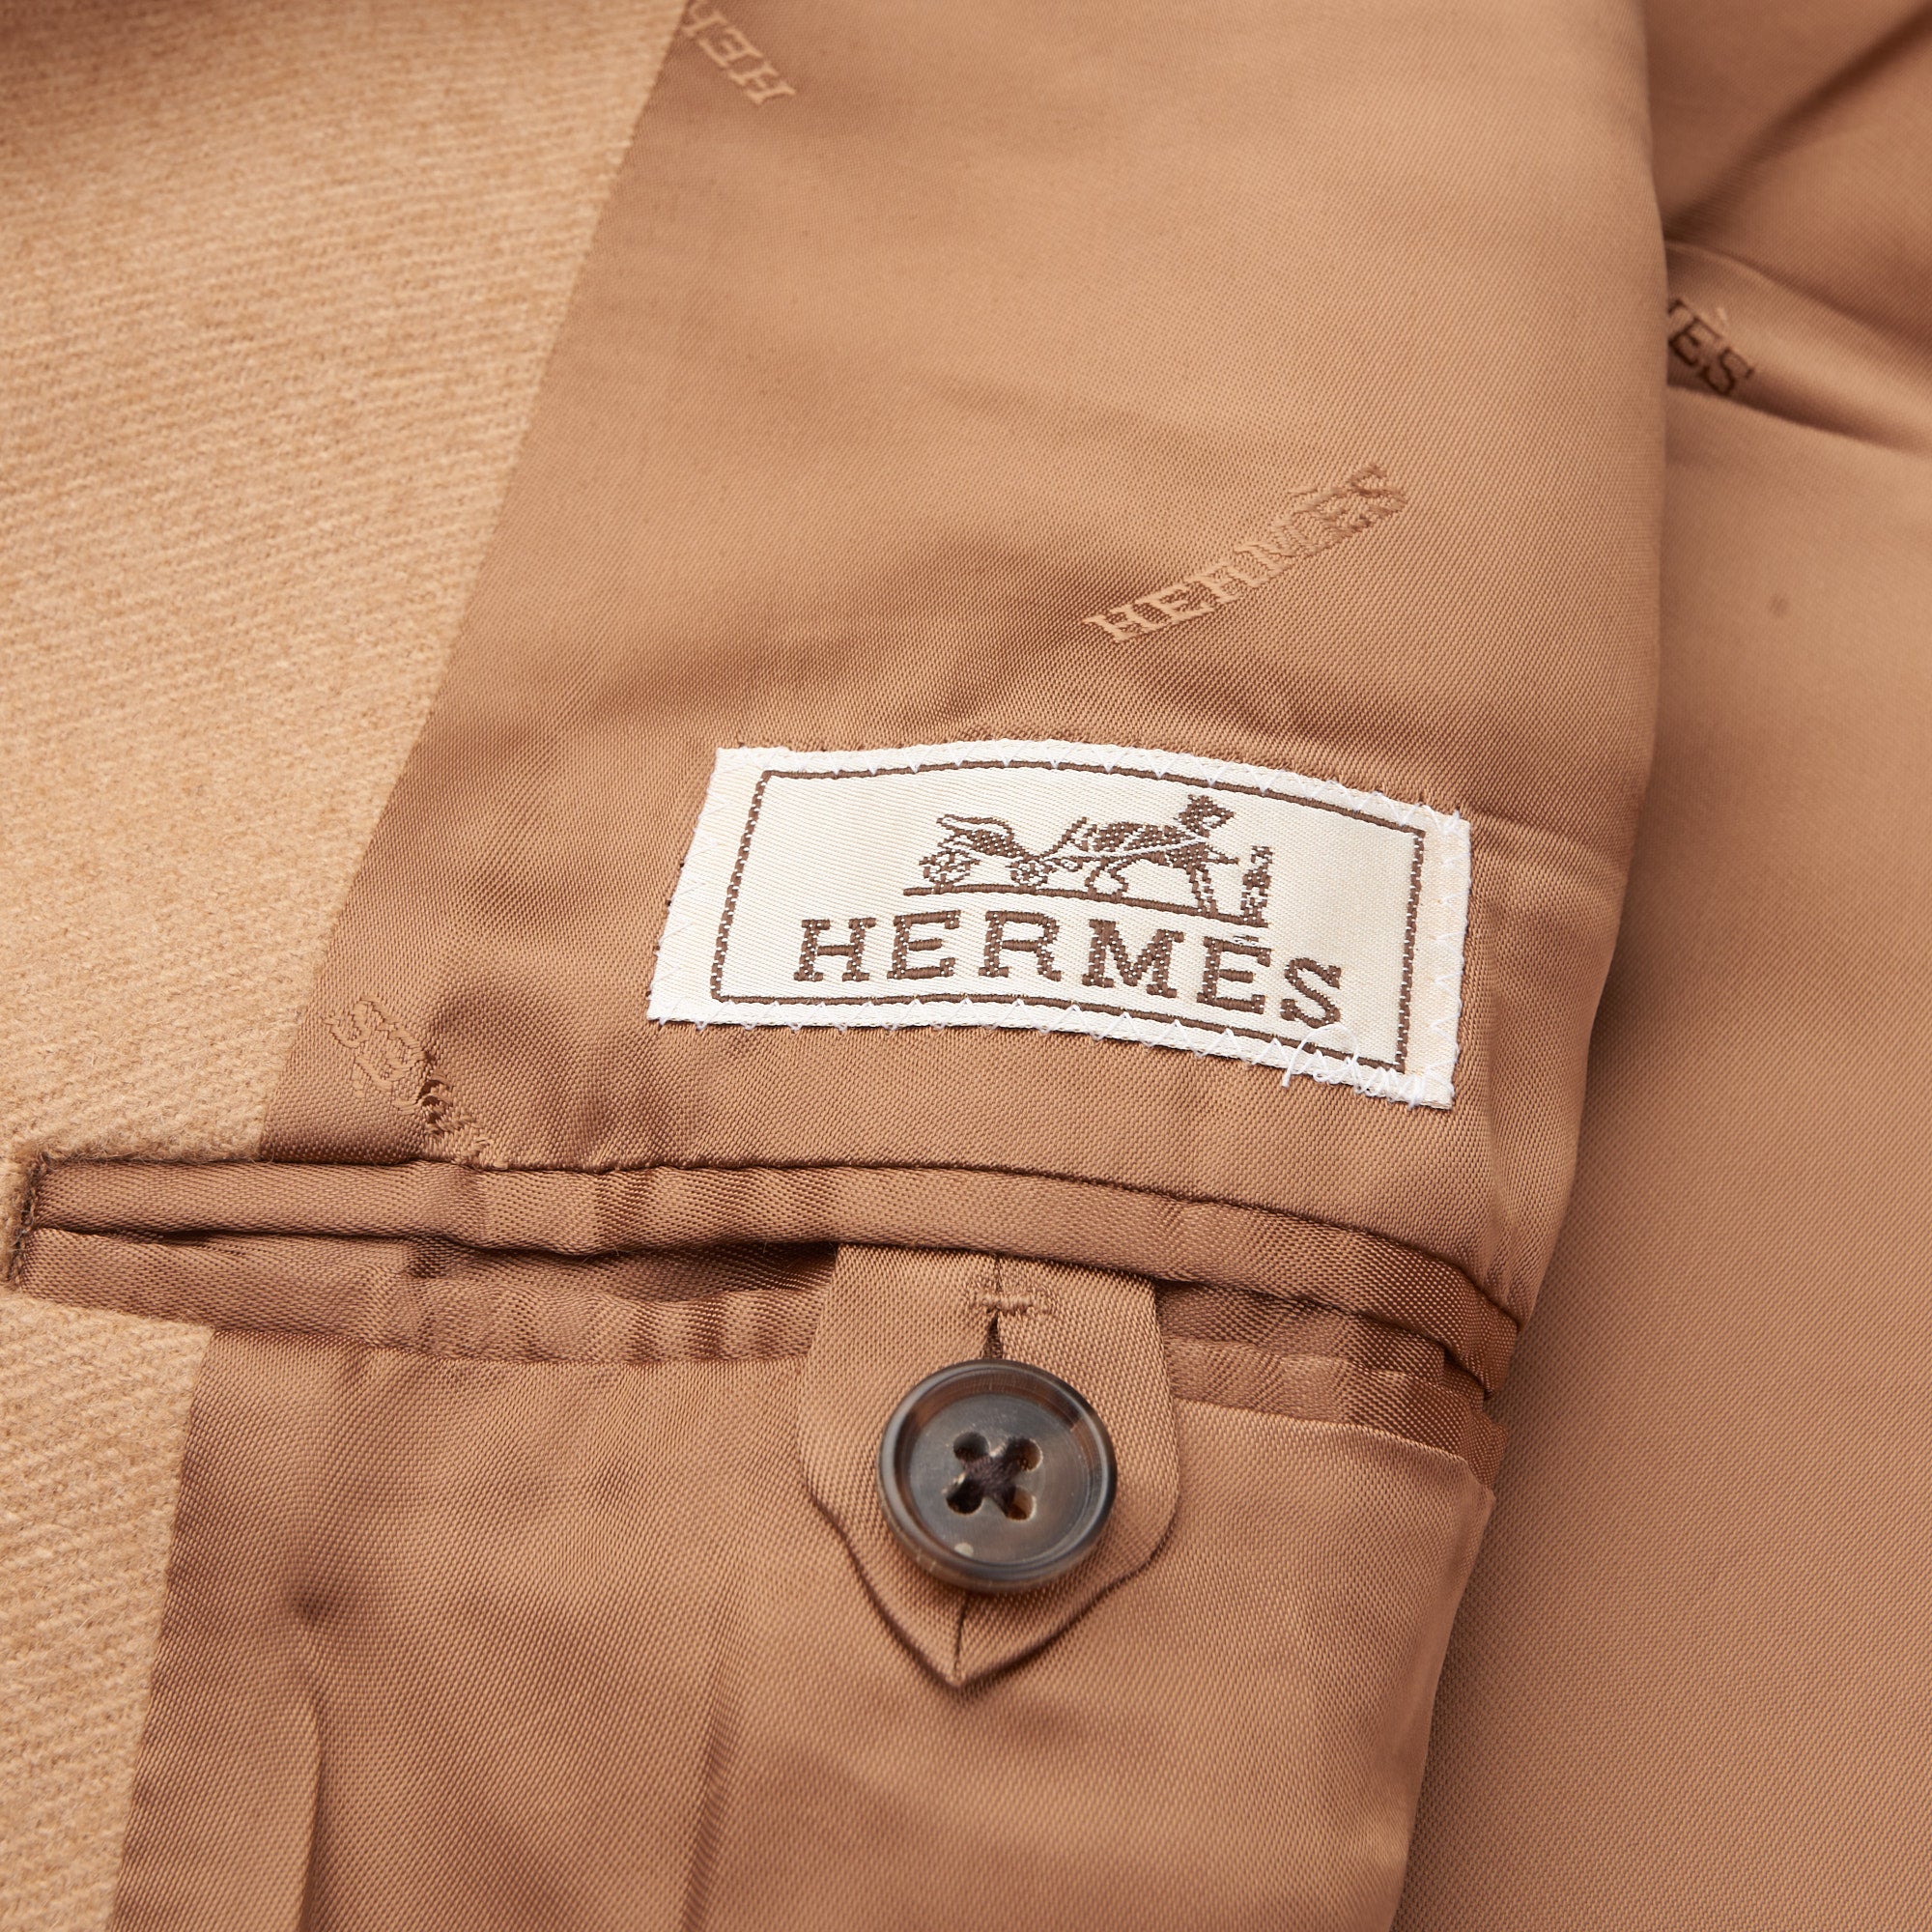 HERMES Paris Tan Camelhair Coat EU 50 NEW US 40 Slim Fit Fit HERMES